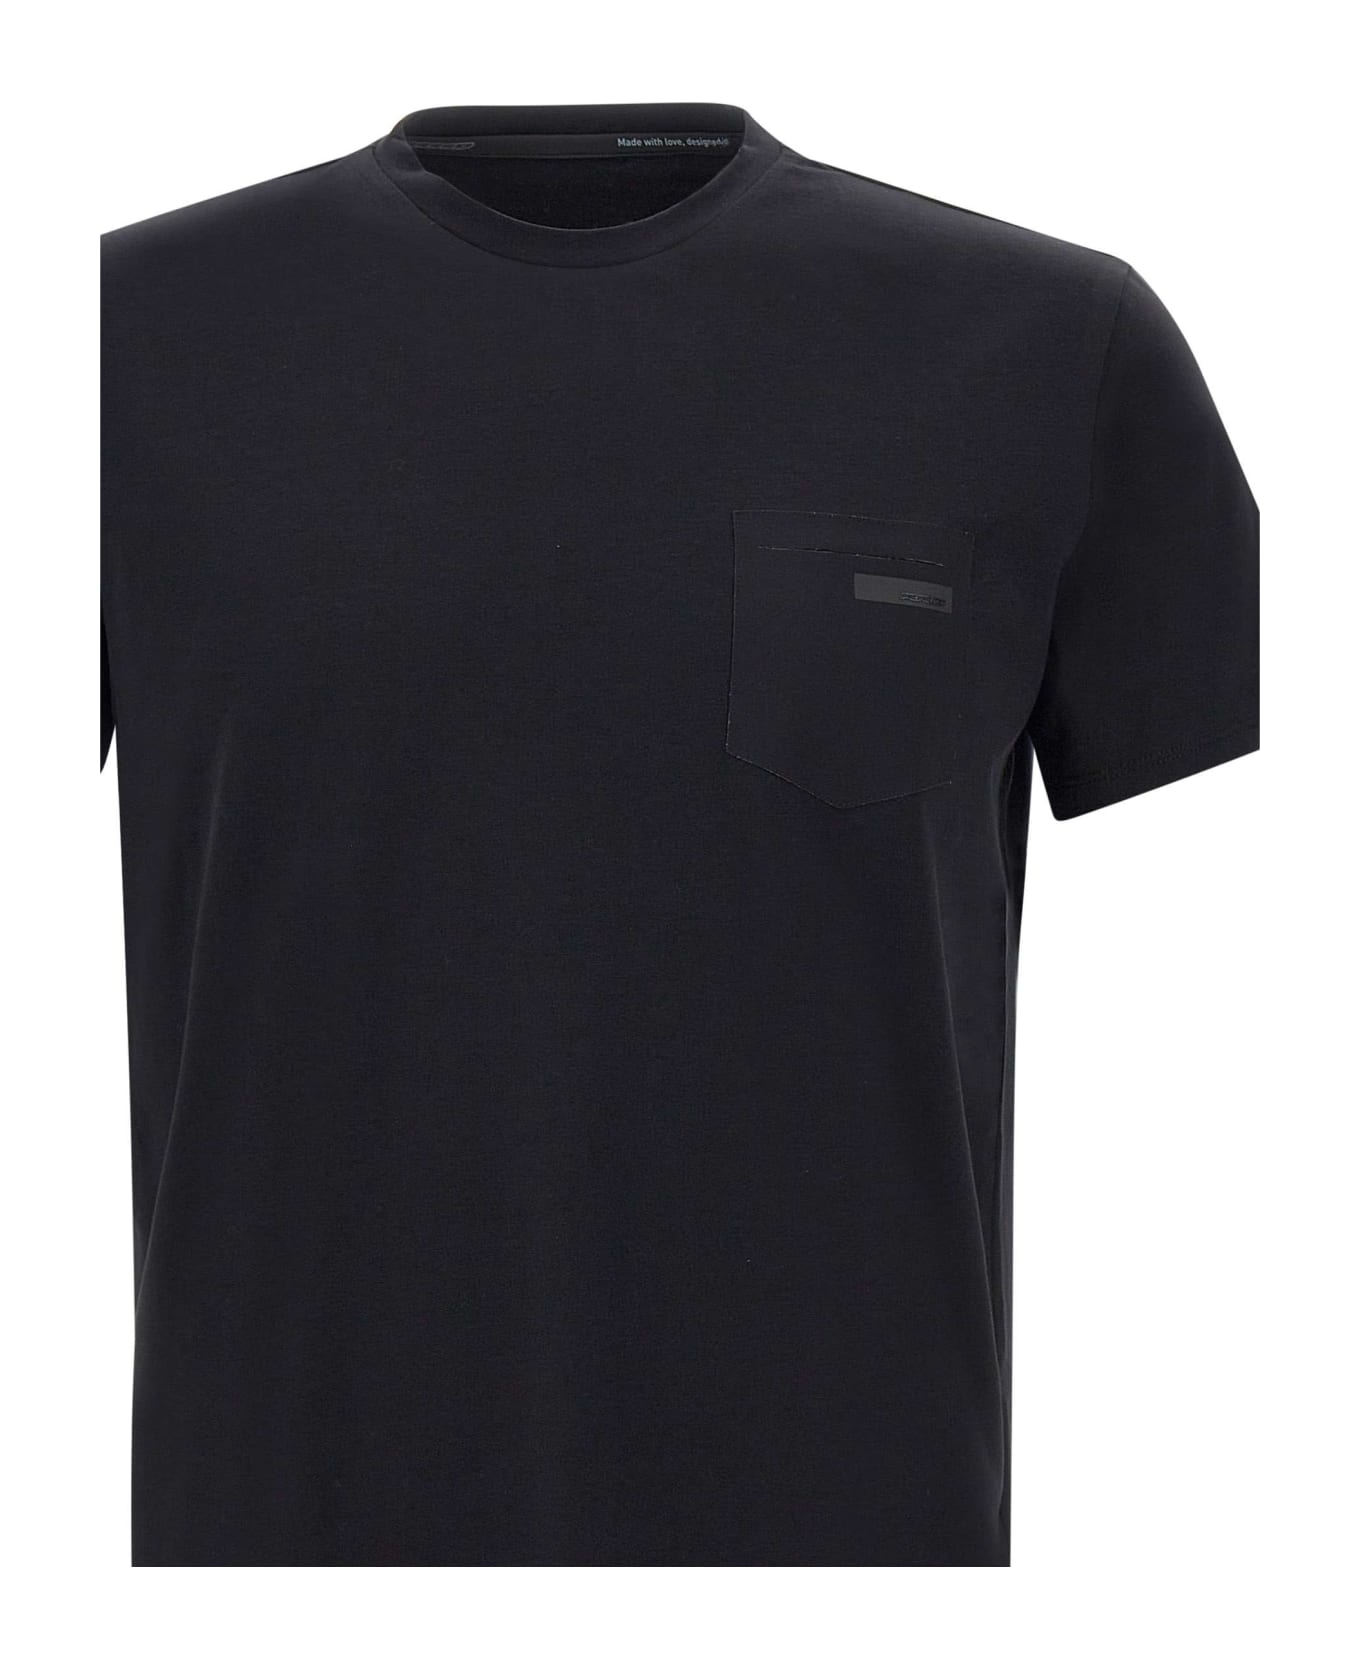 RRD - Roberto Ricci Design 'revo Shirty' T-shirt - Black